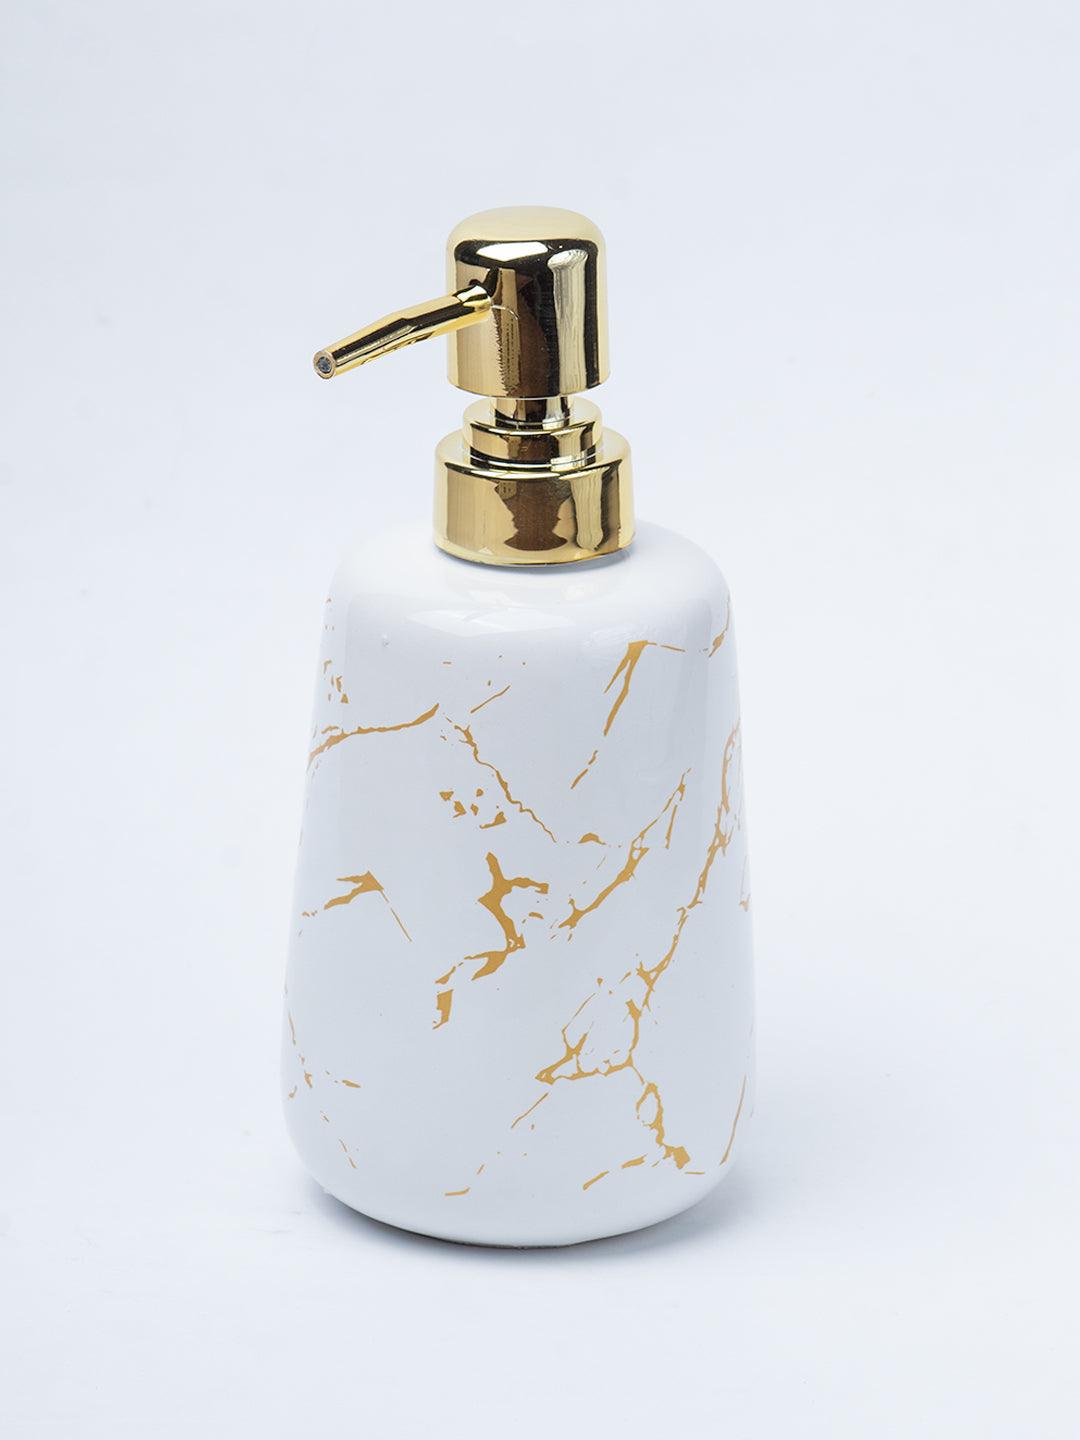 Off White Ceramic Liquid Soap Dispenser - Stone Finish, Bath Accessories - 3